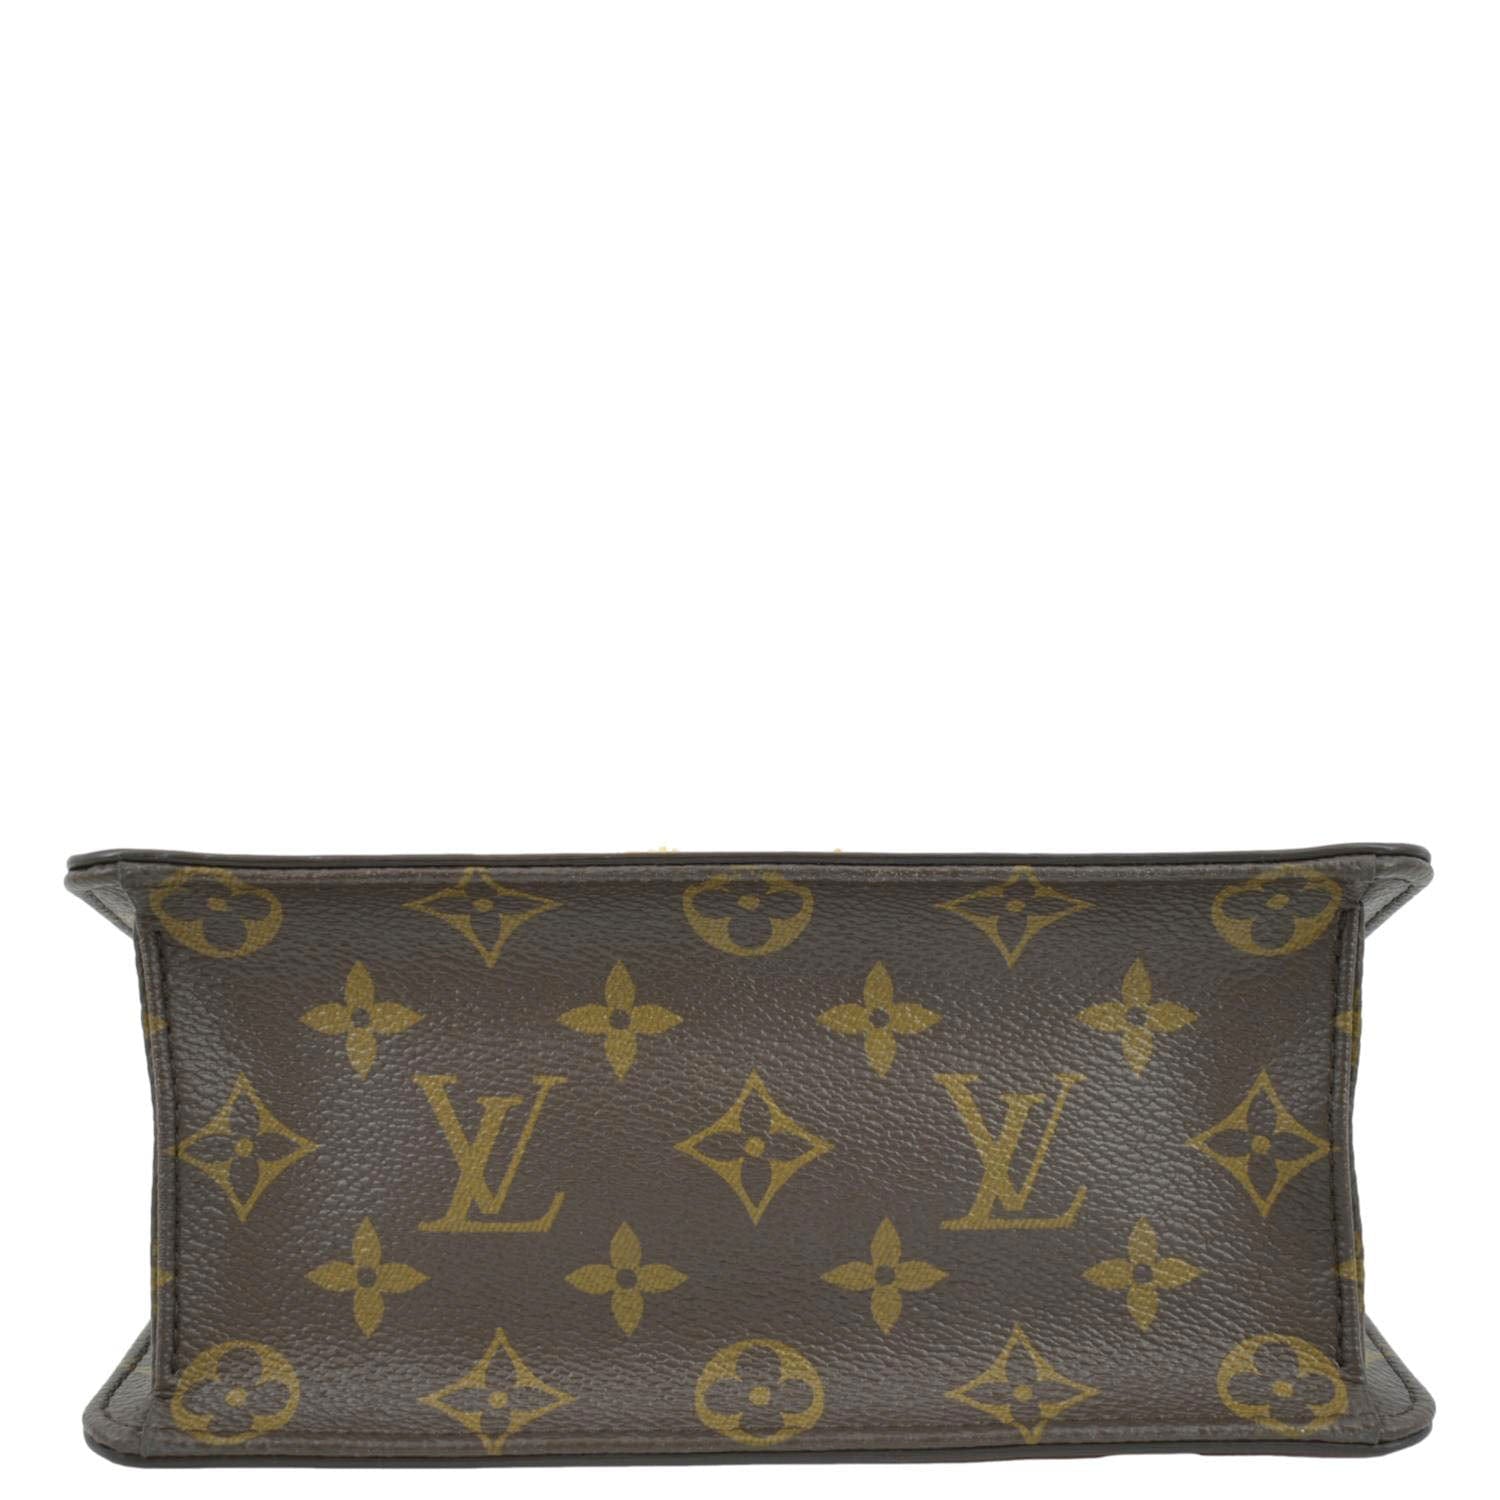 Louis Vuitton Wynwood Monogram Chain Bag - Current Season